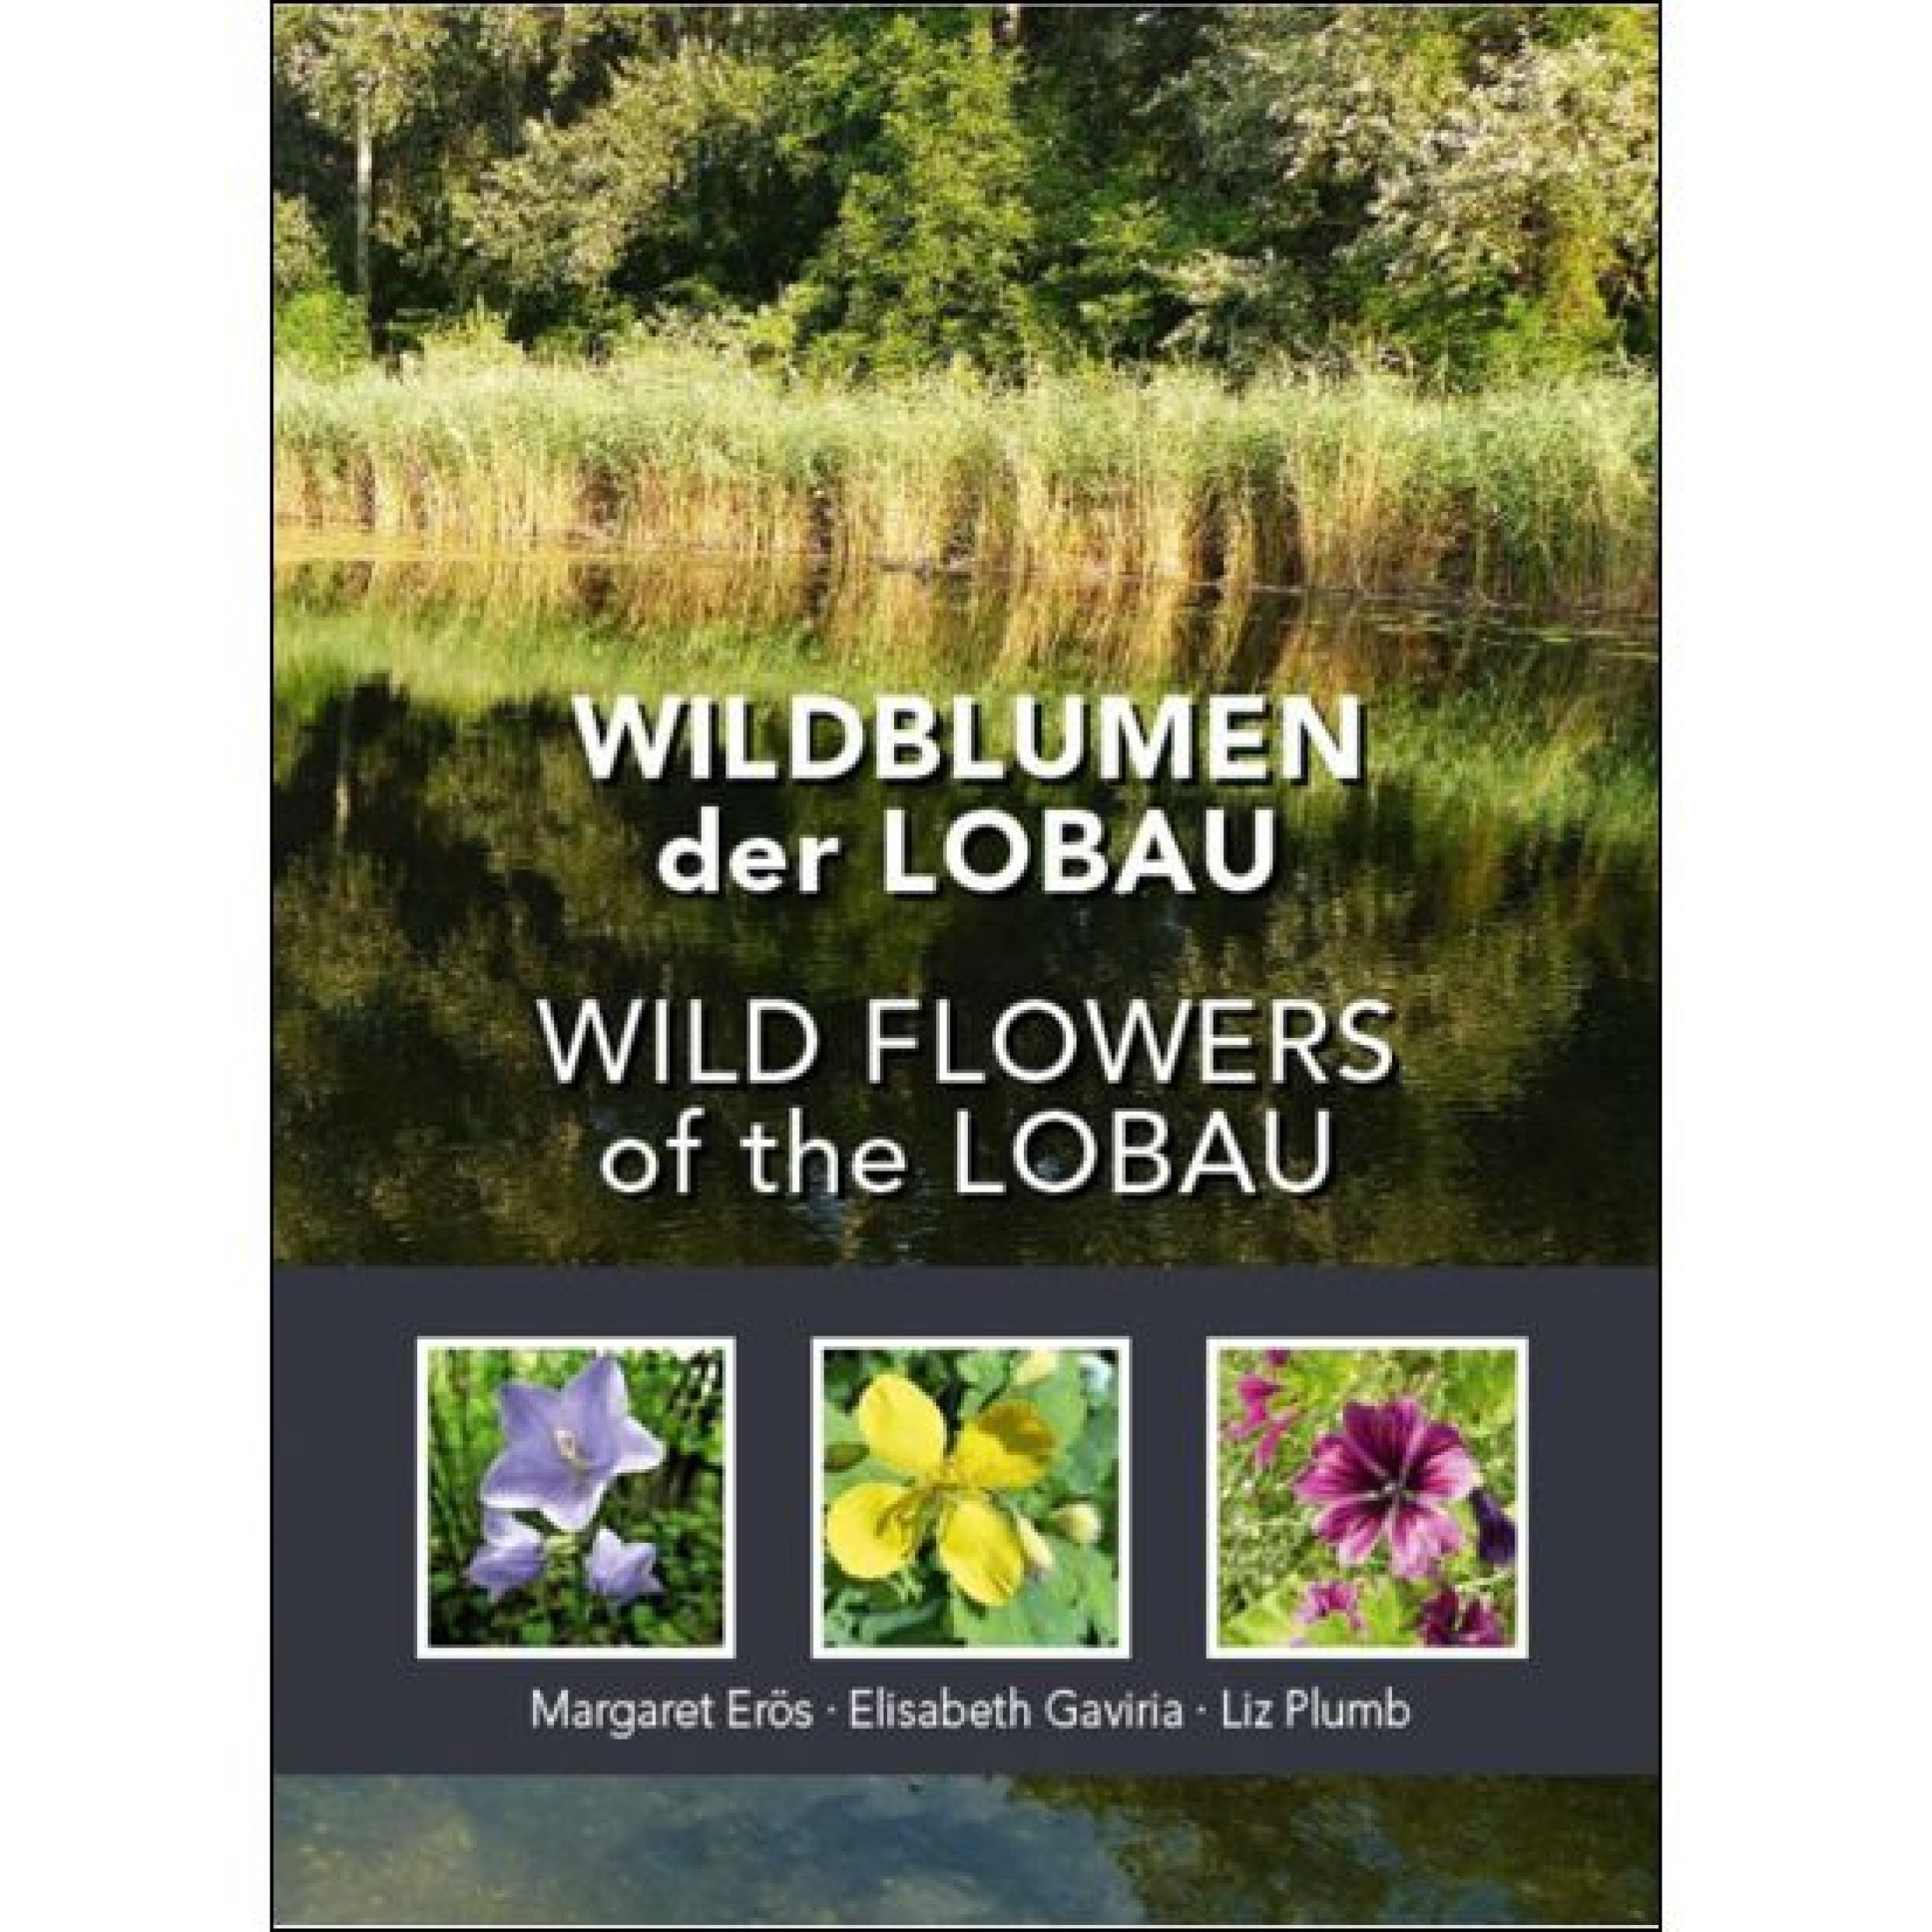 Erös, Margaret – Elisabet Gaviria – Liz Plumb : Wildblumen der Lobau – Wild flowers of the Lobau